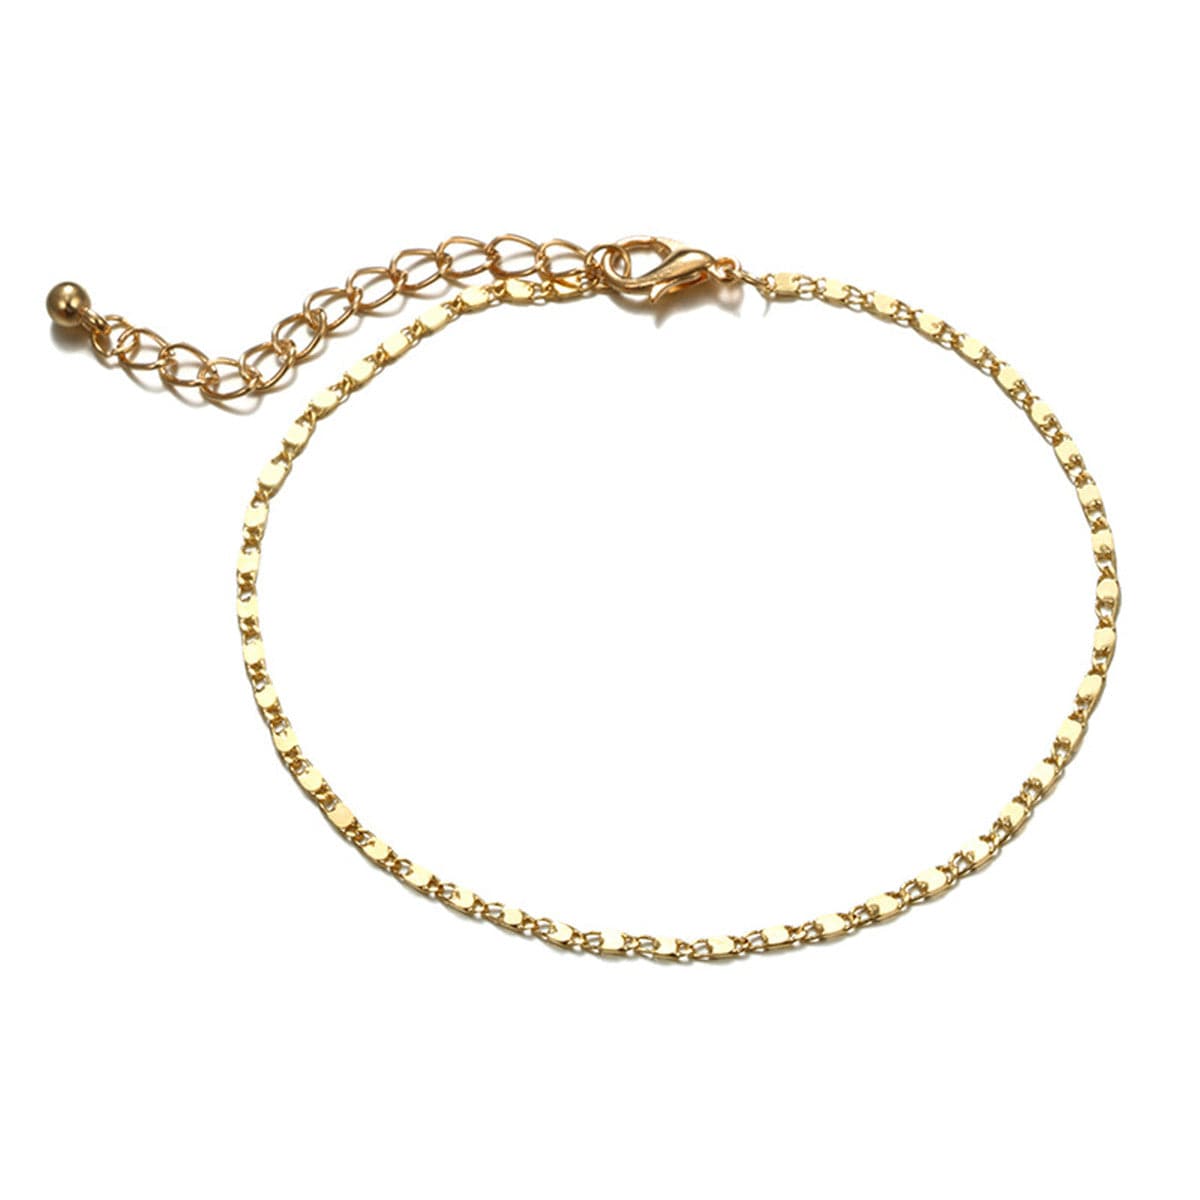 Black Cubic Zirconia & 18K Gold-Plated Bead Heart Bracelet Set